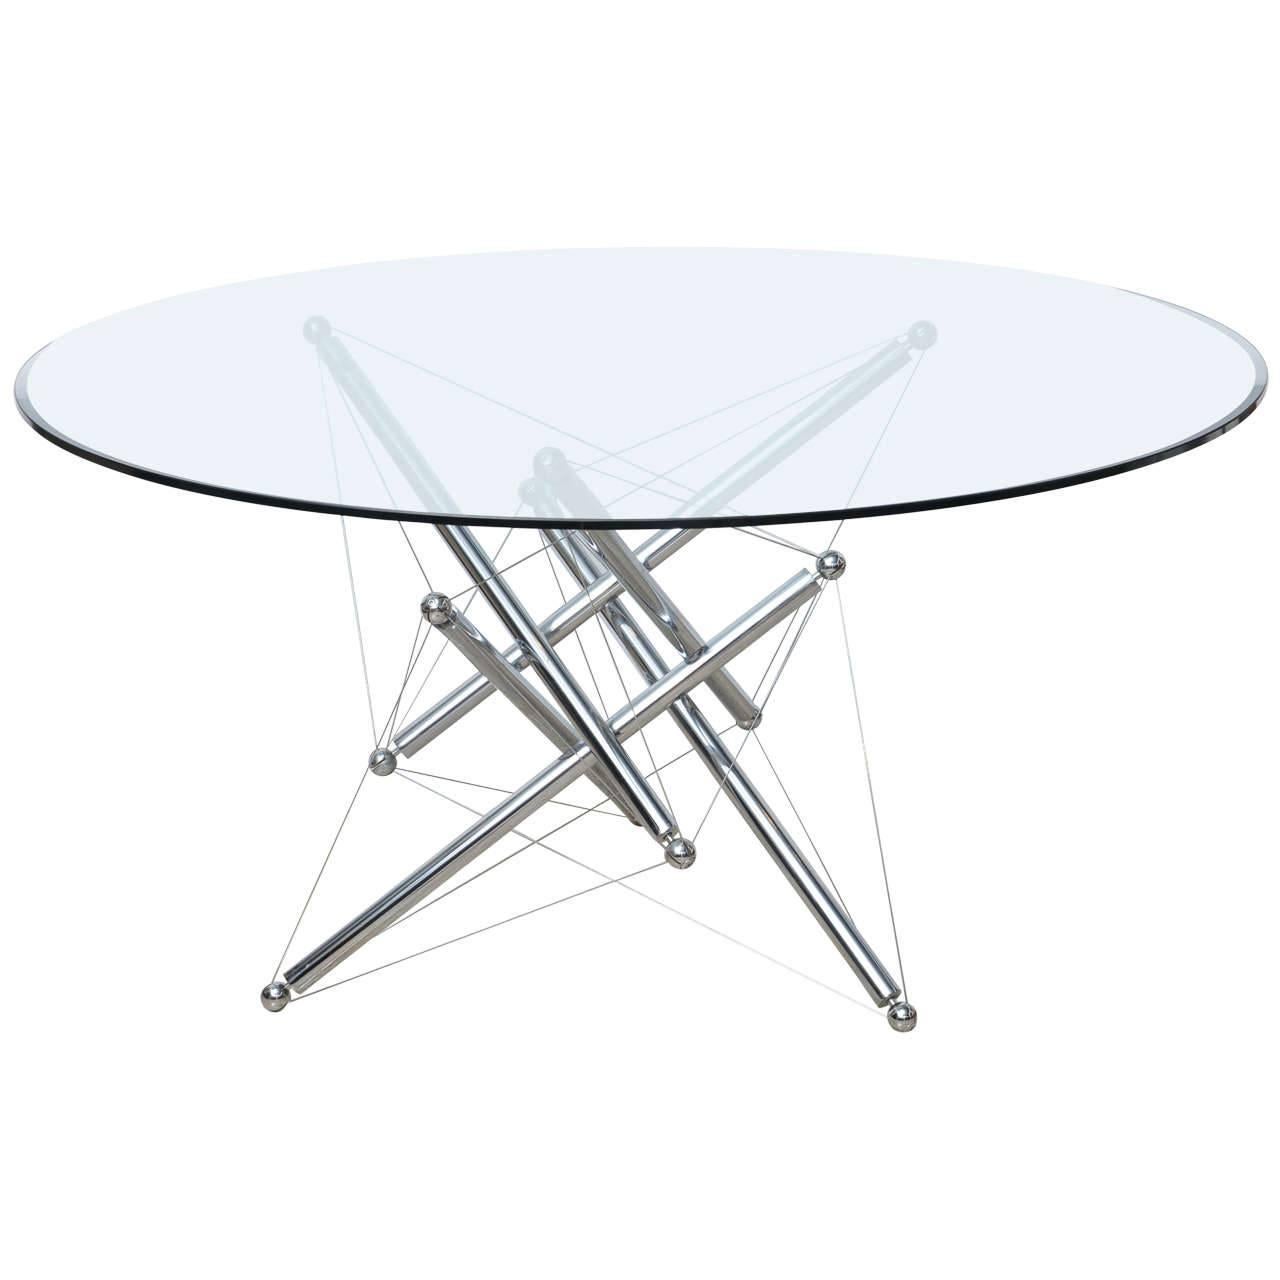 Italian Modern Chromed Steel and Glass Center Table, Theodore Waddell, Cassina